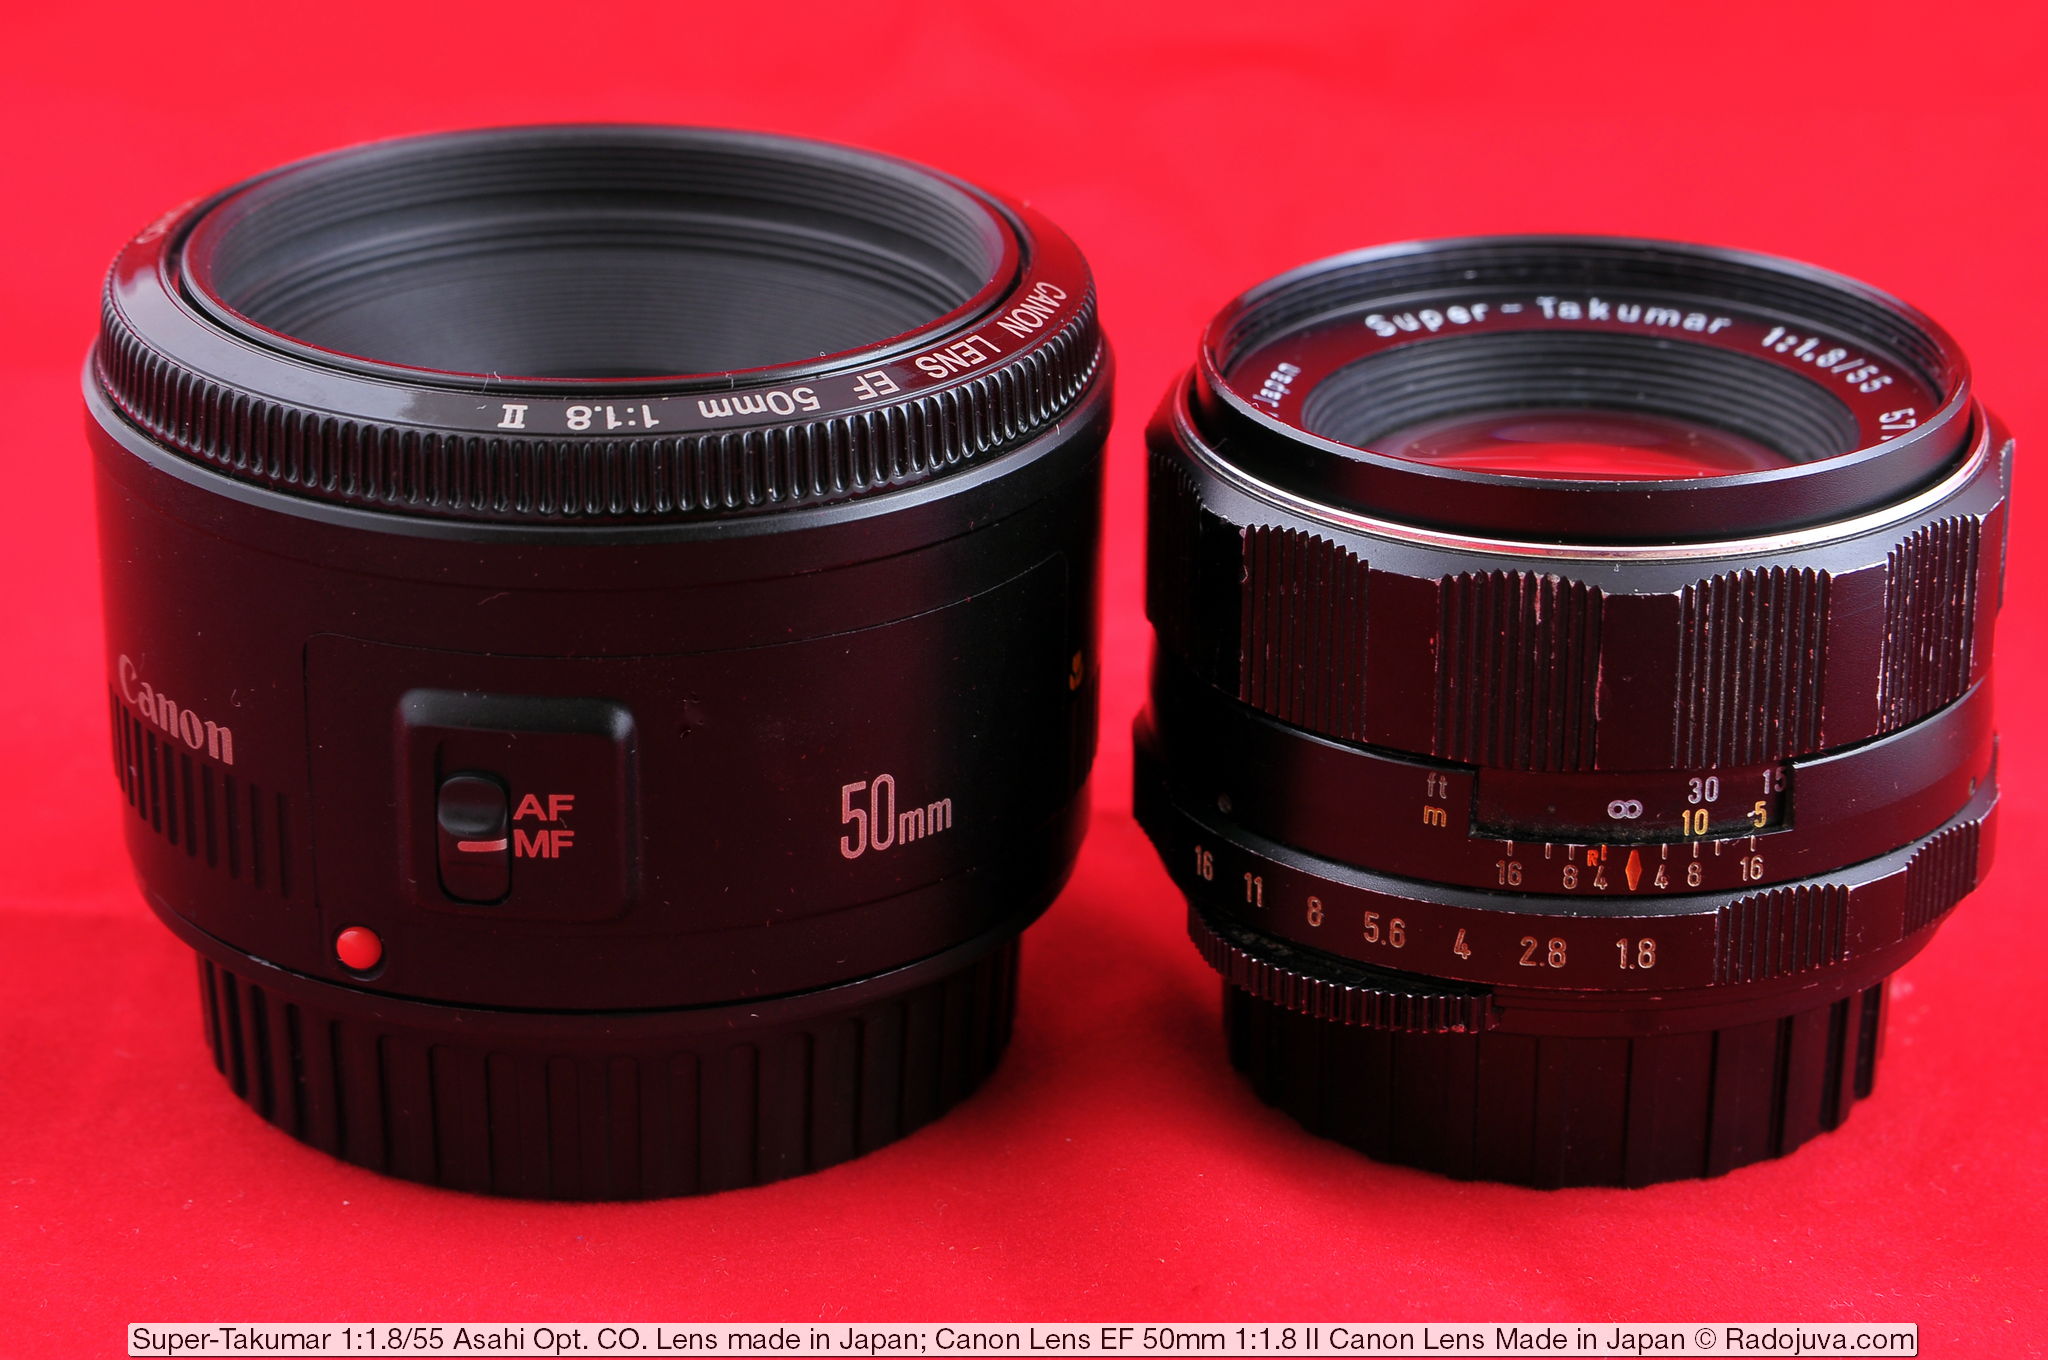 Объективы Super-Takumar 1:1.8/55 Asahi Opt. Co. Lens made in Japan и Canon Lens EF 50mm 1:1.8 II Canon Lens Made in Japan